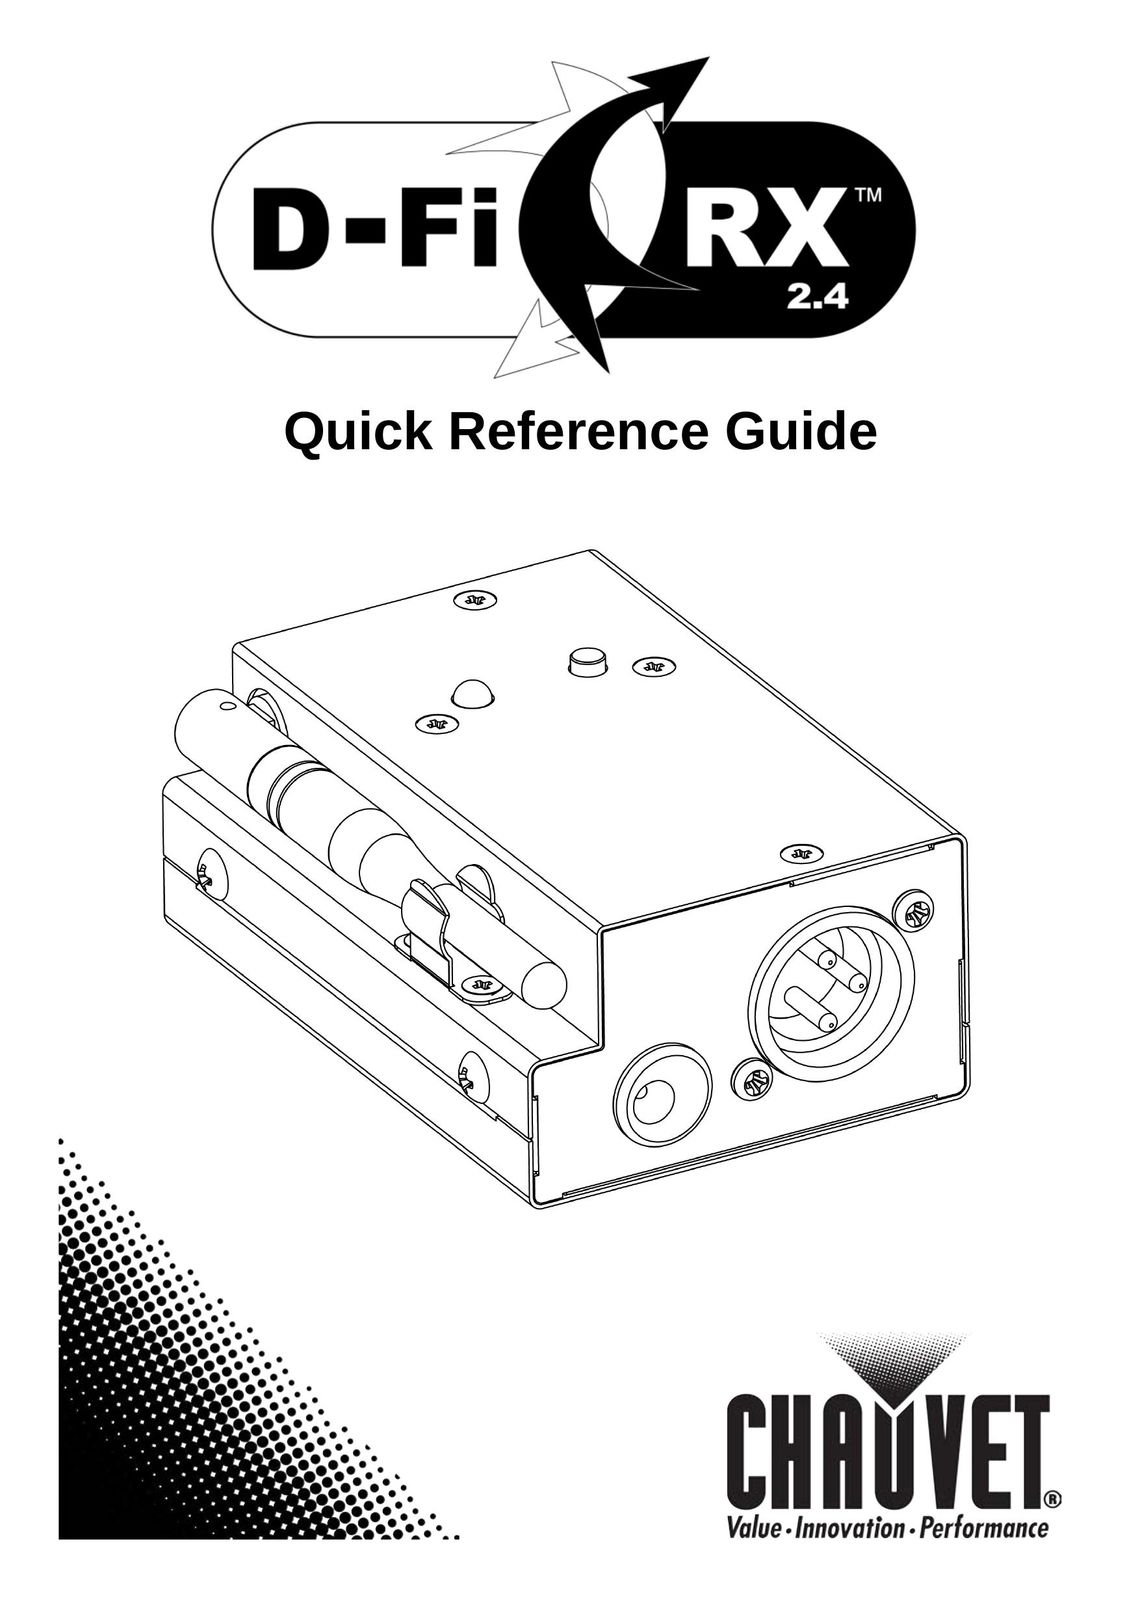 Chauvet D-Fi 2.4 Rx Oven User Manual